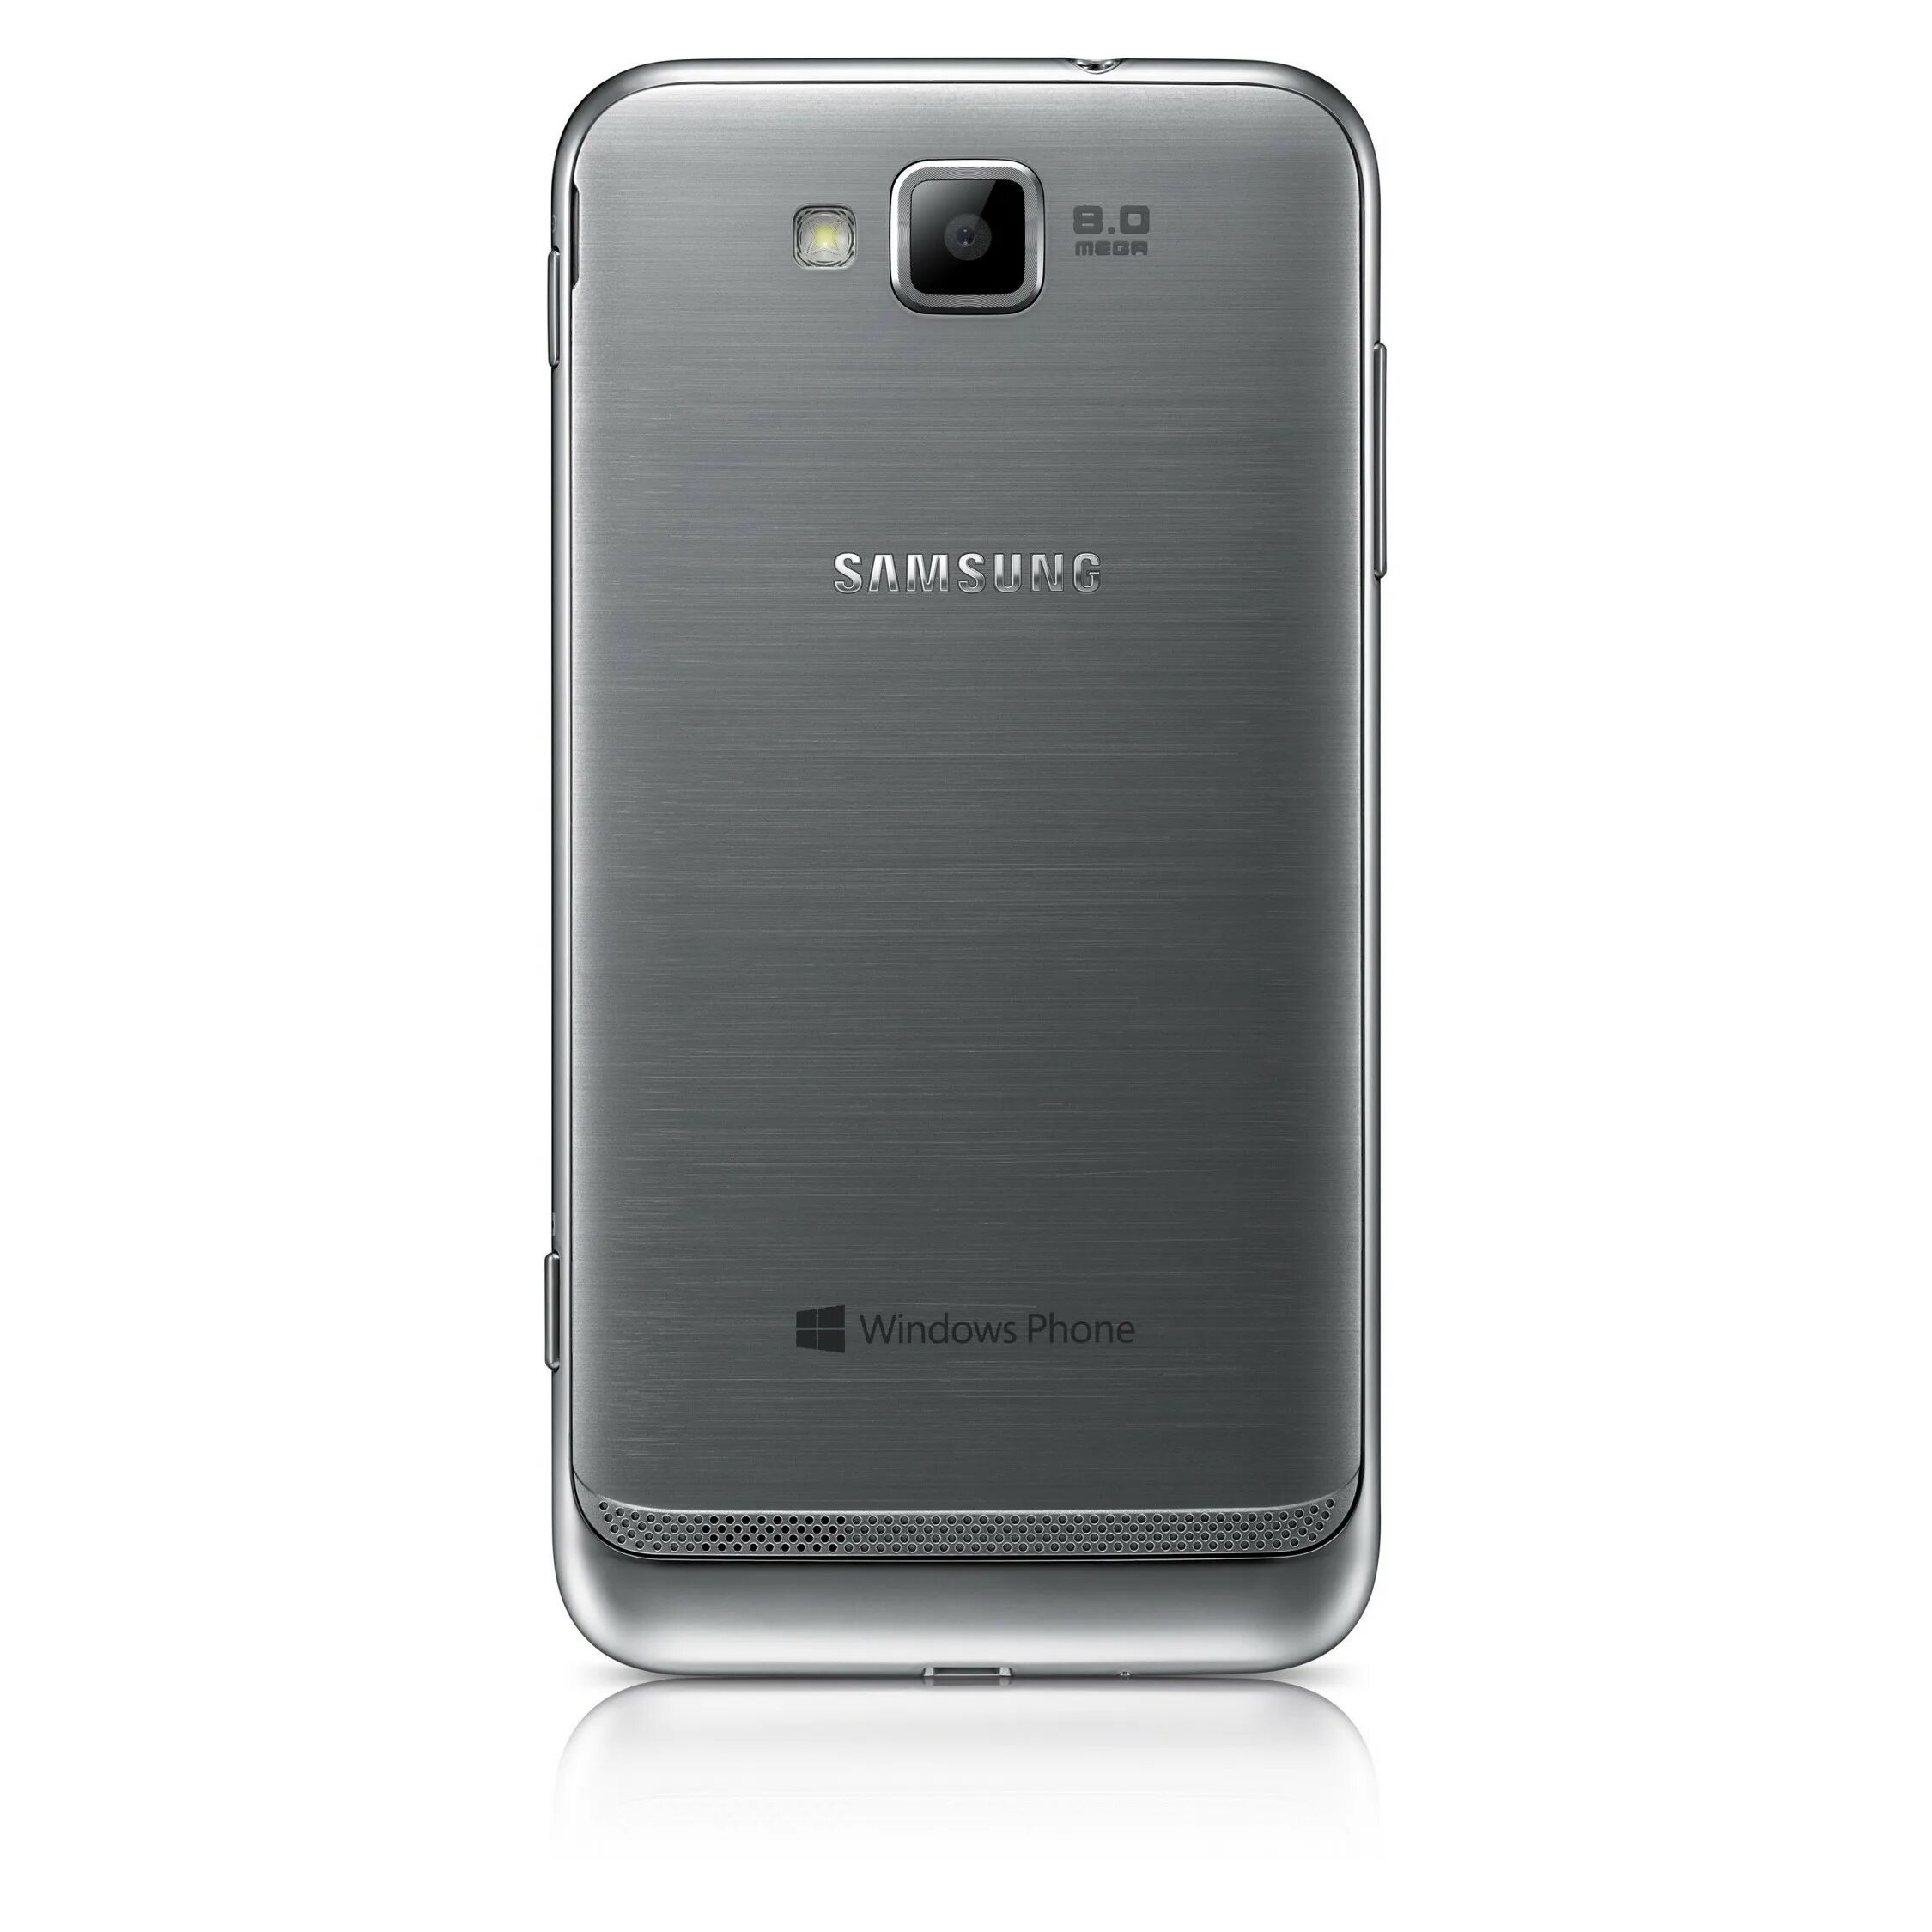 Samsung Galaxy ATIV S. -I8750 Samsung. Samsung 16gb. Samsung ATIV S gt-i8750 32 ГБ. Телефон самсунг 16